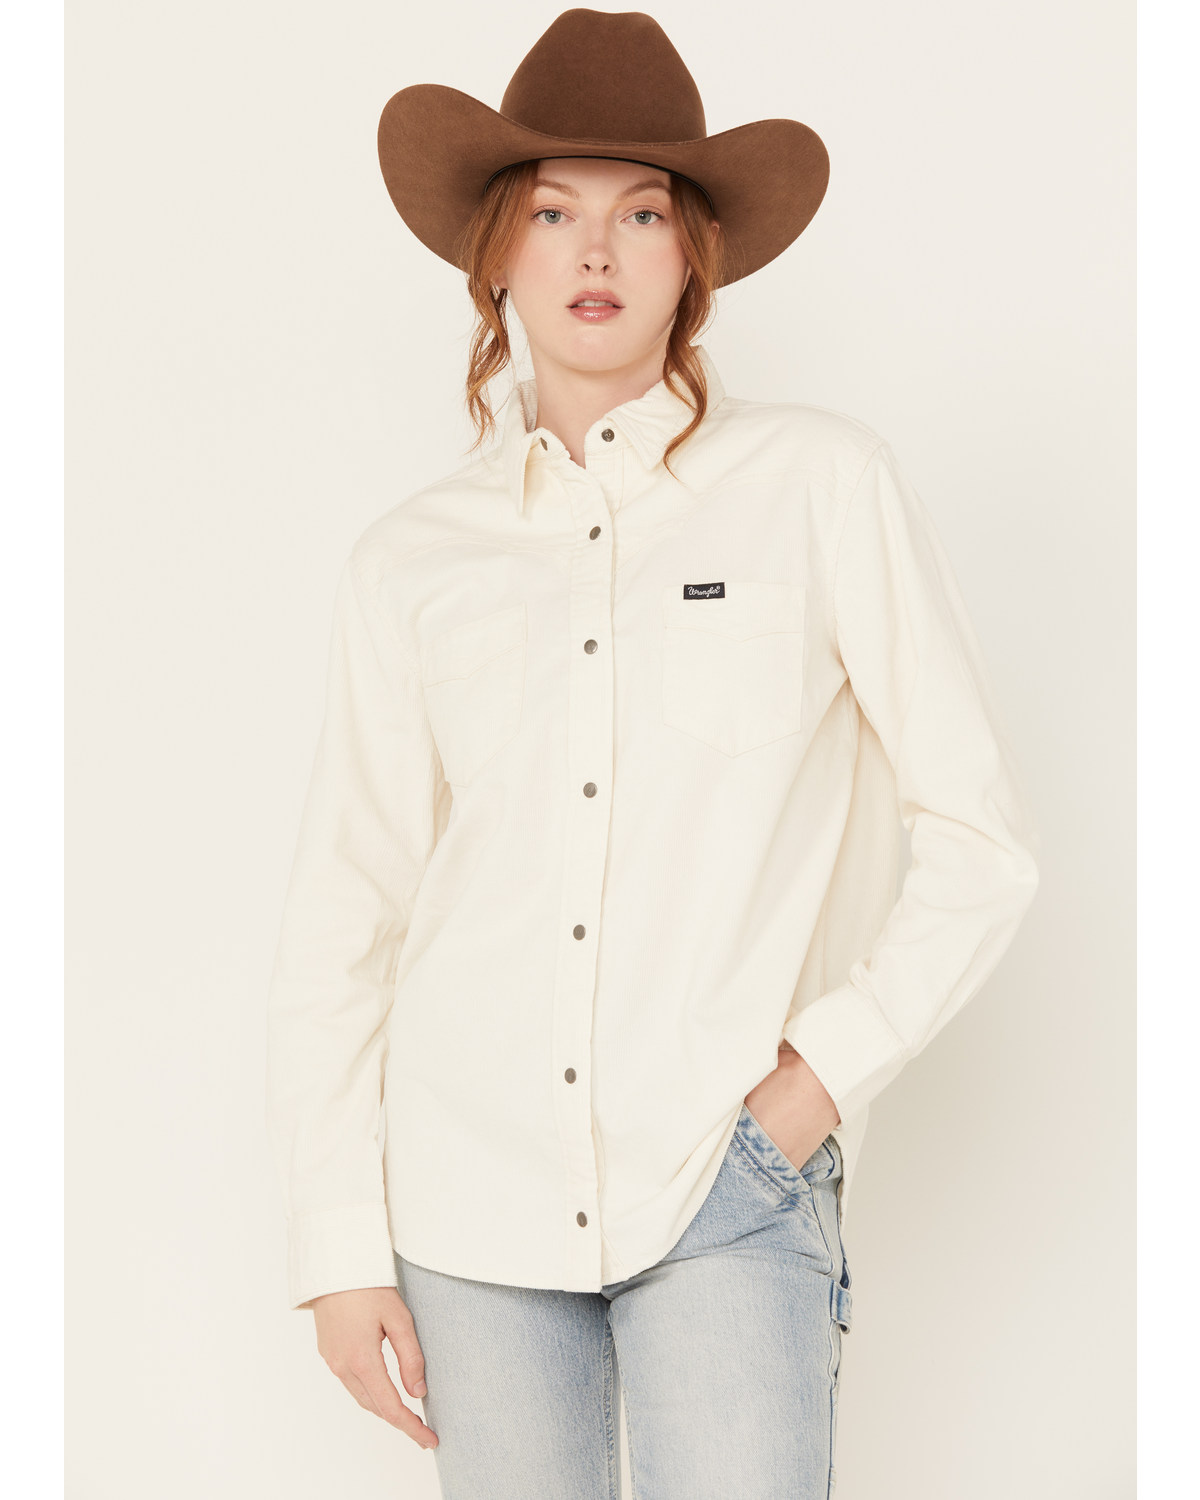 Wrangler Retro Women's Corduroy Long Sleeve Snap Western Shirt